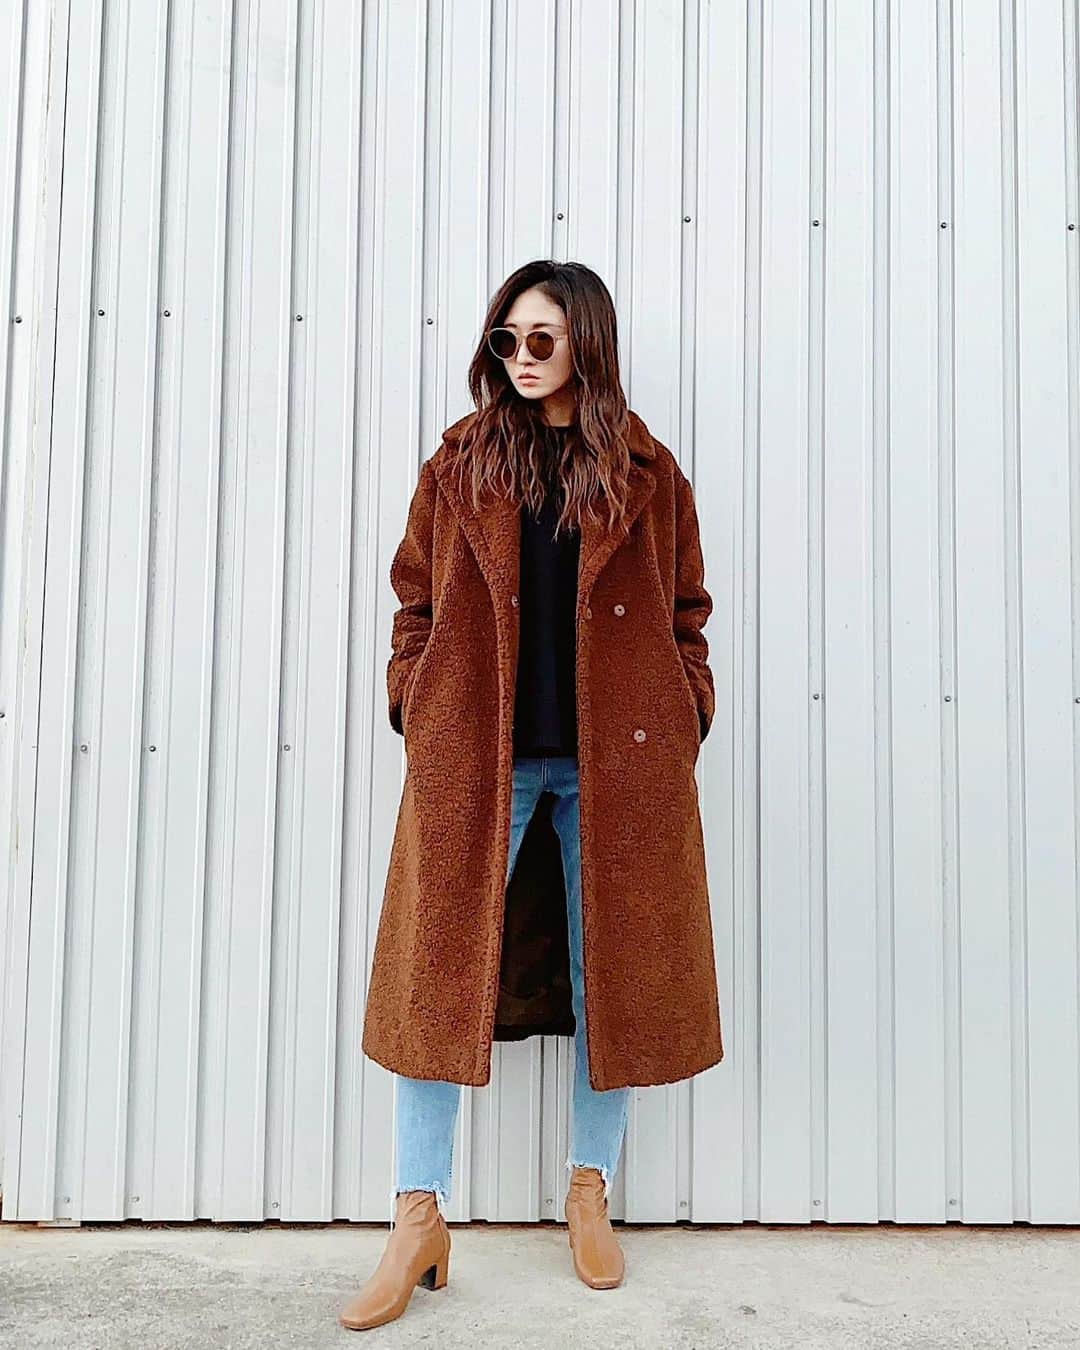 rittann48のインスタグラム：「. . . ㅤㅤㅤㅤㅤㅤㅤㅤㅤㅤㅤㅤㅤ fashion ㅤㅤㅤㅤㅤㅤㅤㅤㅤㅤㅤㅤㅤ ㅤㅤㅤㅤㅤㅤㅤㅤㅤㅤㅤㅤㅤ brown code  去年か一昨年に買った @naning9_ の ロングコートお気に入り 暖かくて寒い日に絶対着てしまう .ㅤㅤㅤㅤㅤㅤㅤㅤㅤㅤㅤㅤㅤ .ㅤㅤㅤㅤㅤㅤㅤㅤㅤㅤㅤㅤㅤ .ㅤㅤㅤㅤㅤㅤㅤㅤㅤㅤㅤㅤㅤ #simple #fashion #style  #code #ootd #outfit  #zara #naning9 #dholic」